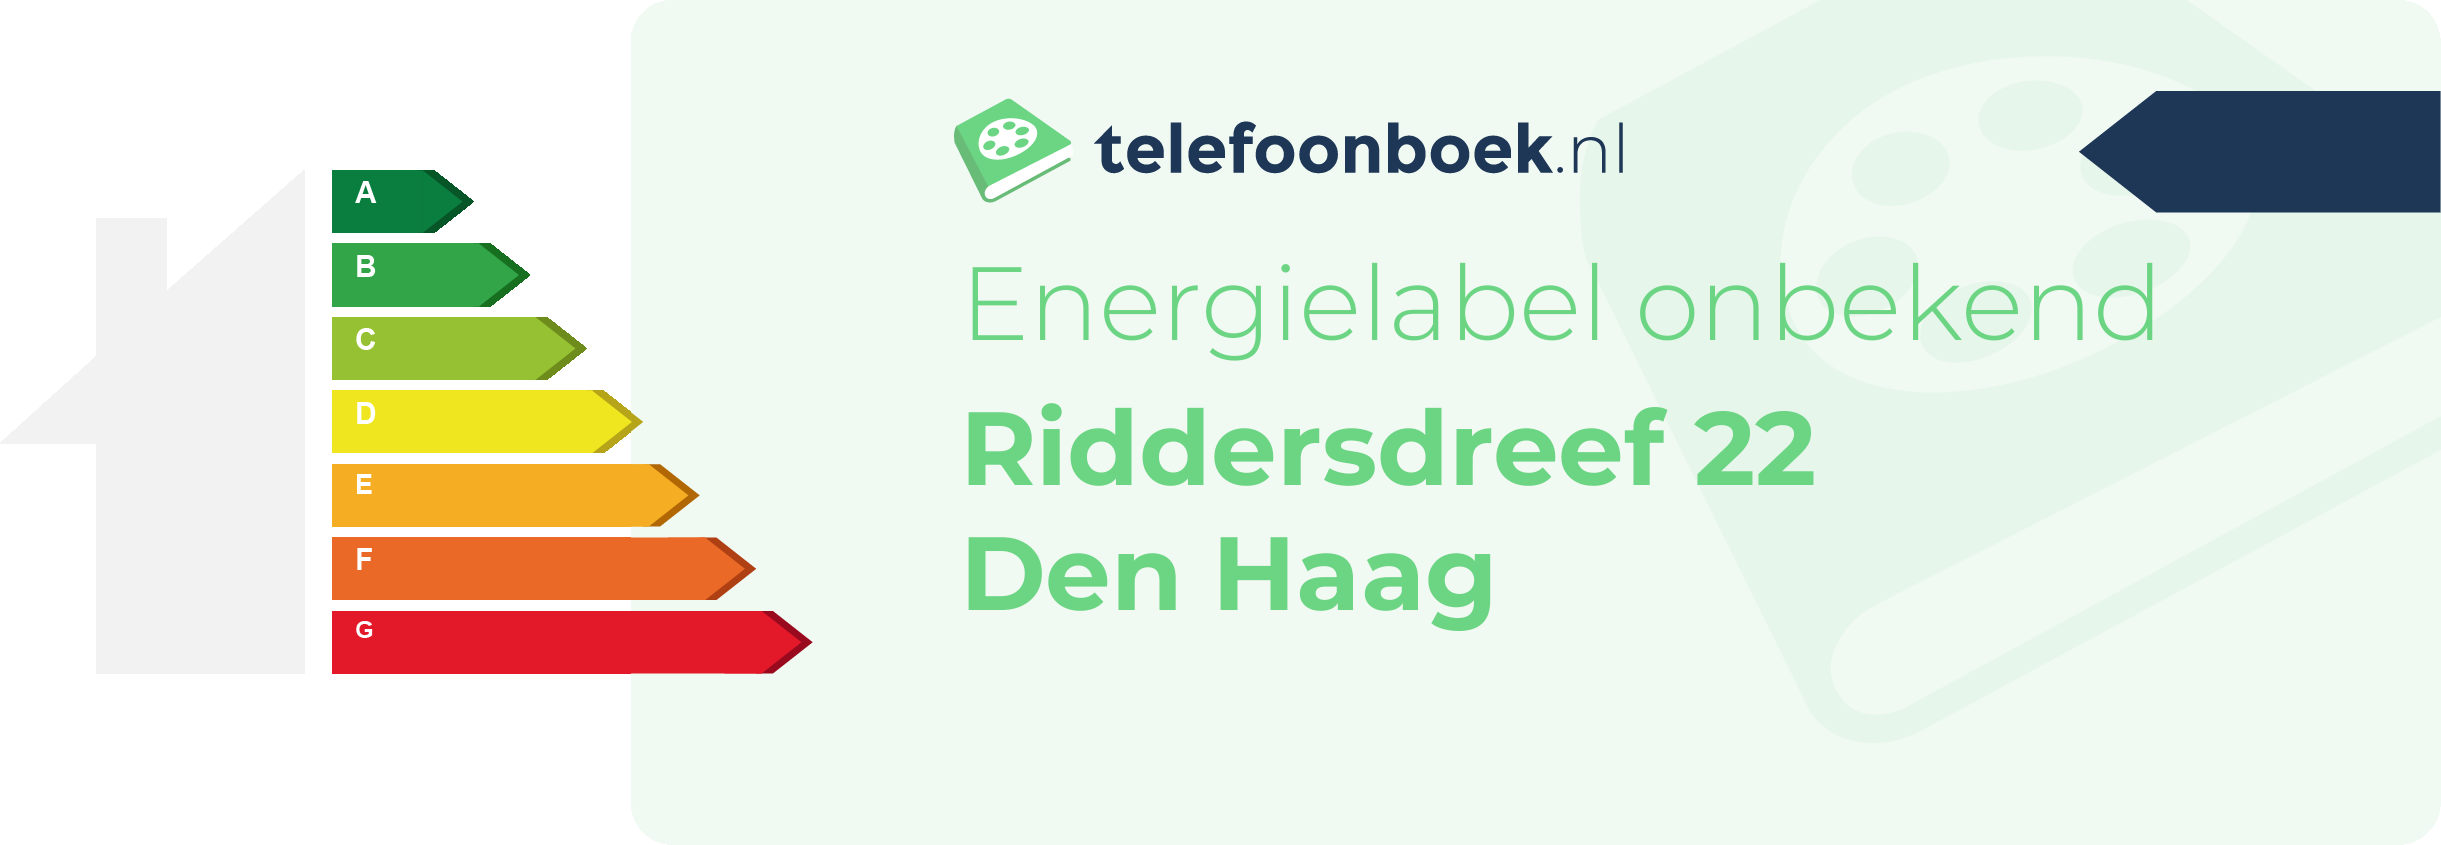 Energielabel Riddersdreef 22 Den Haag